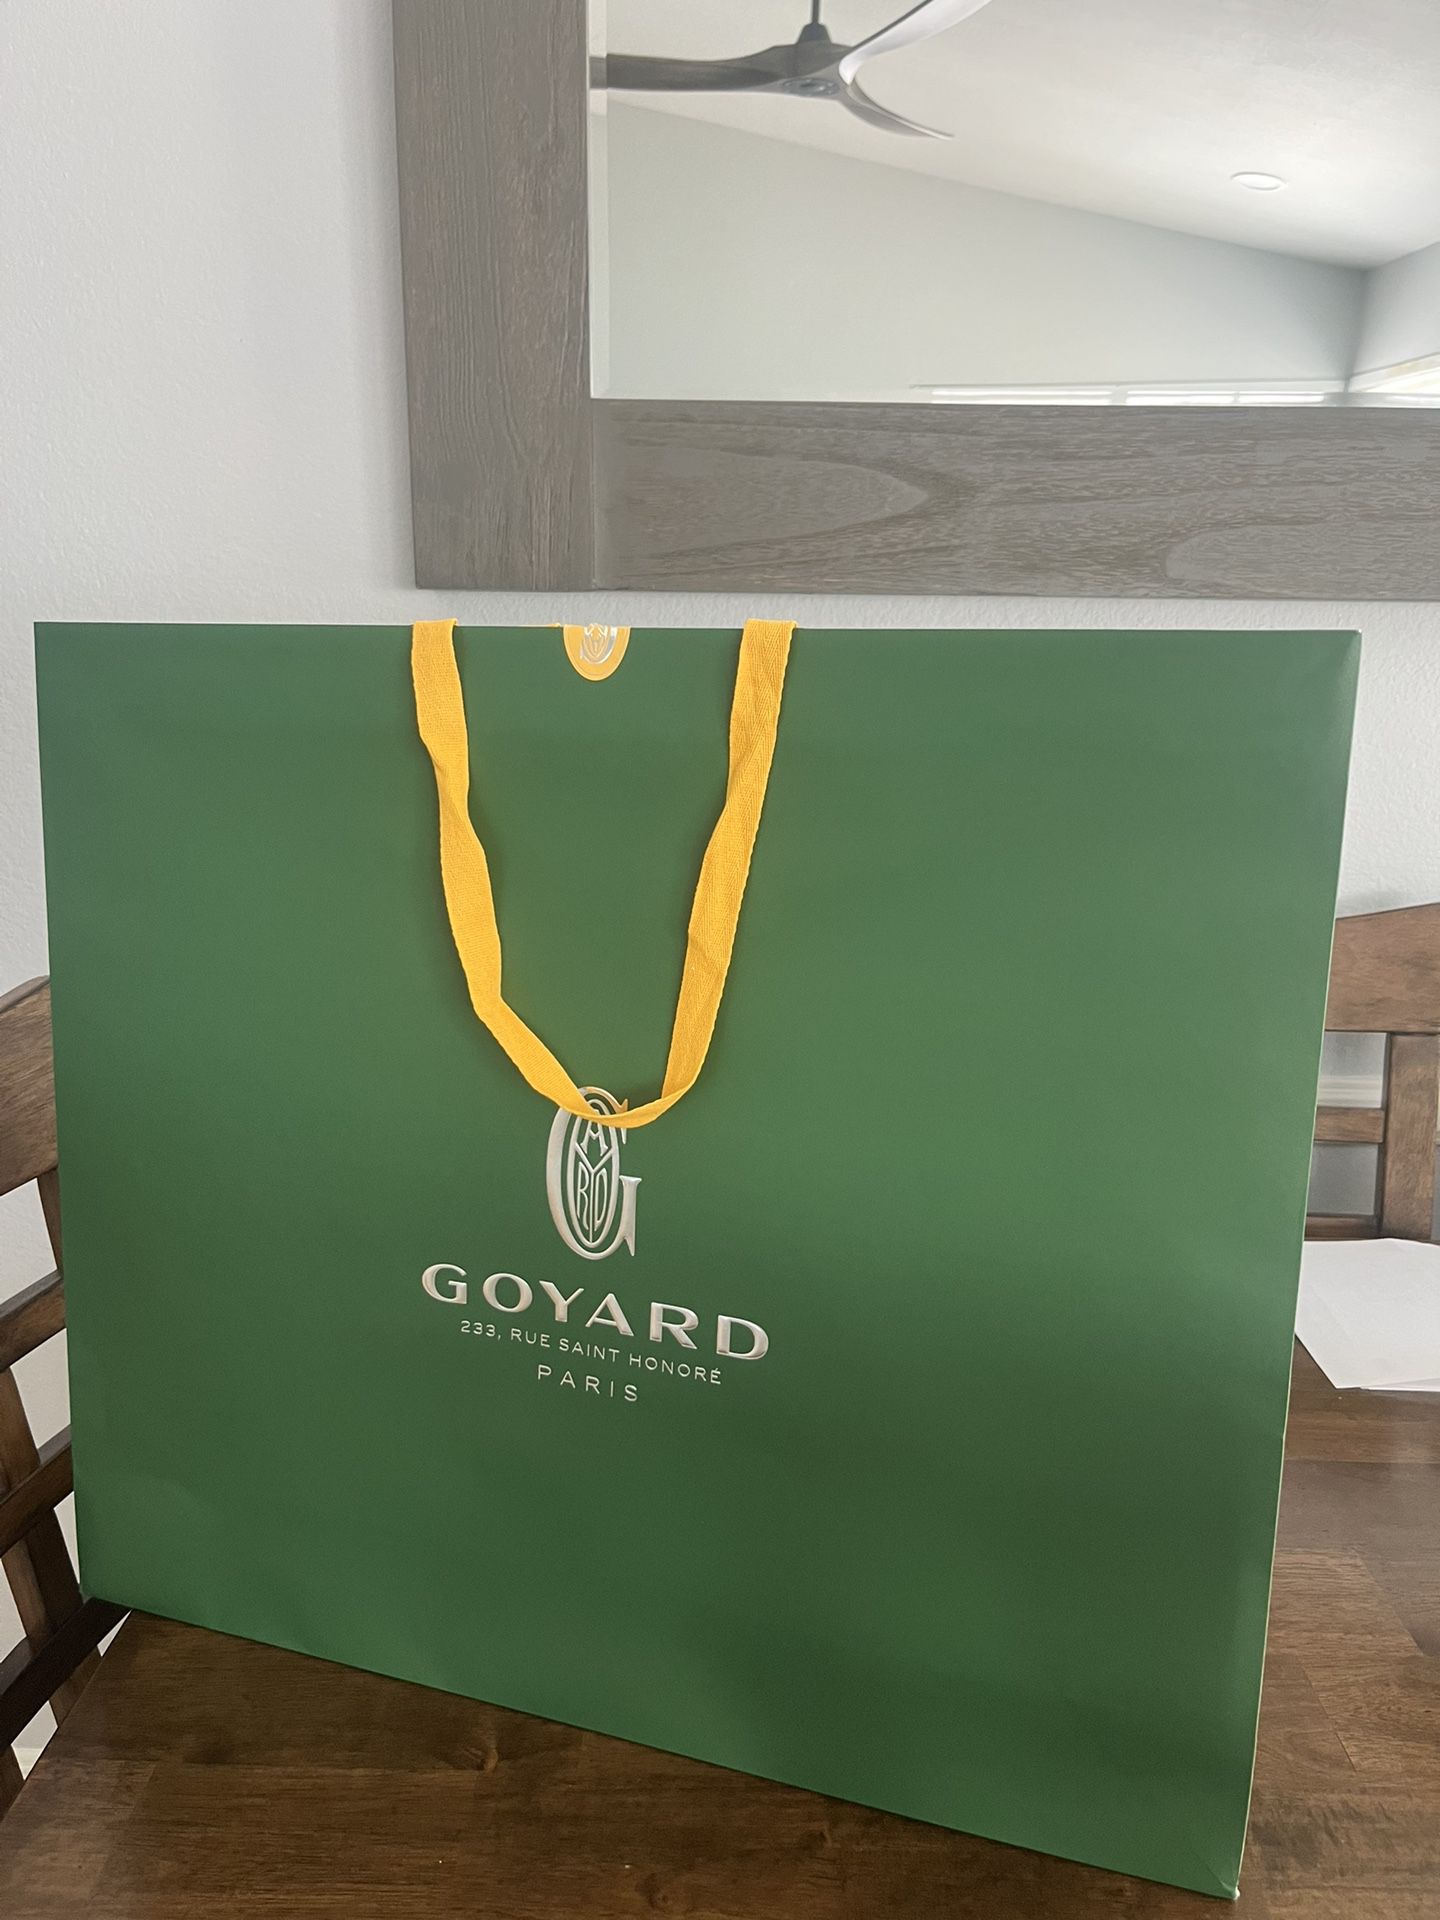 GOYARD Bags for Sale in Irvine, CA - OfferUp